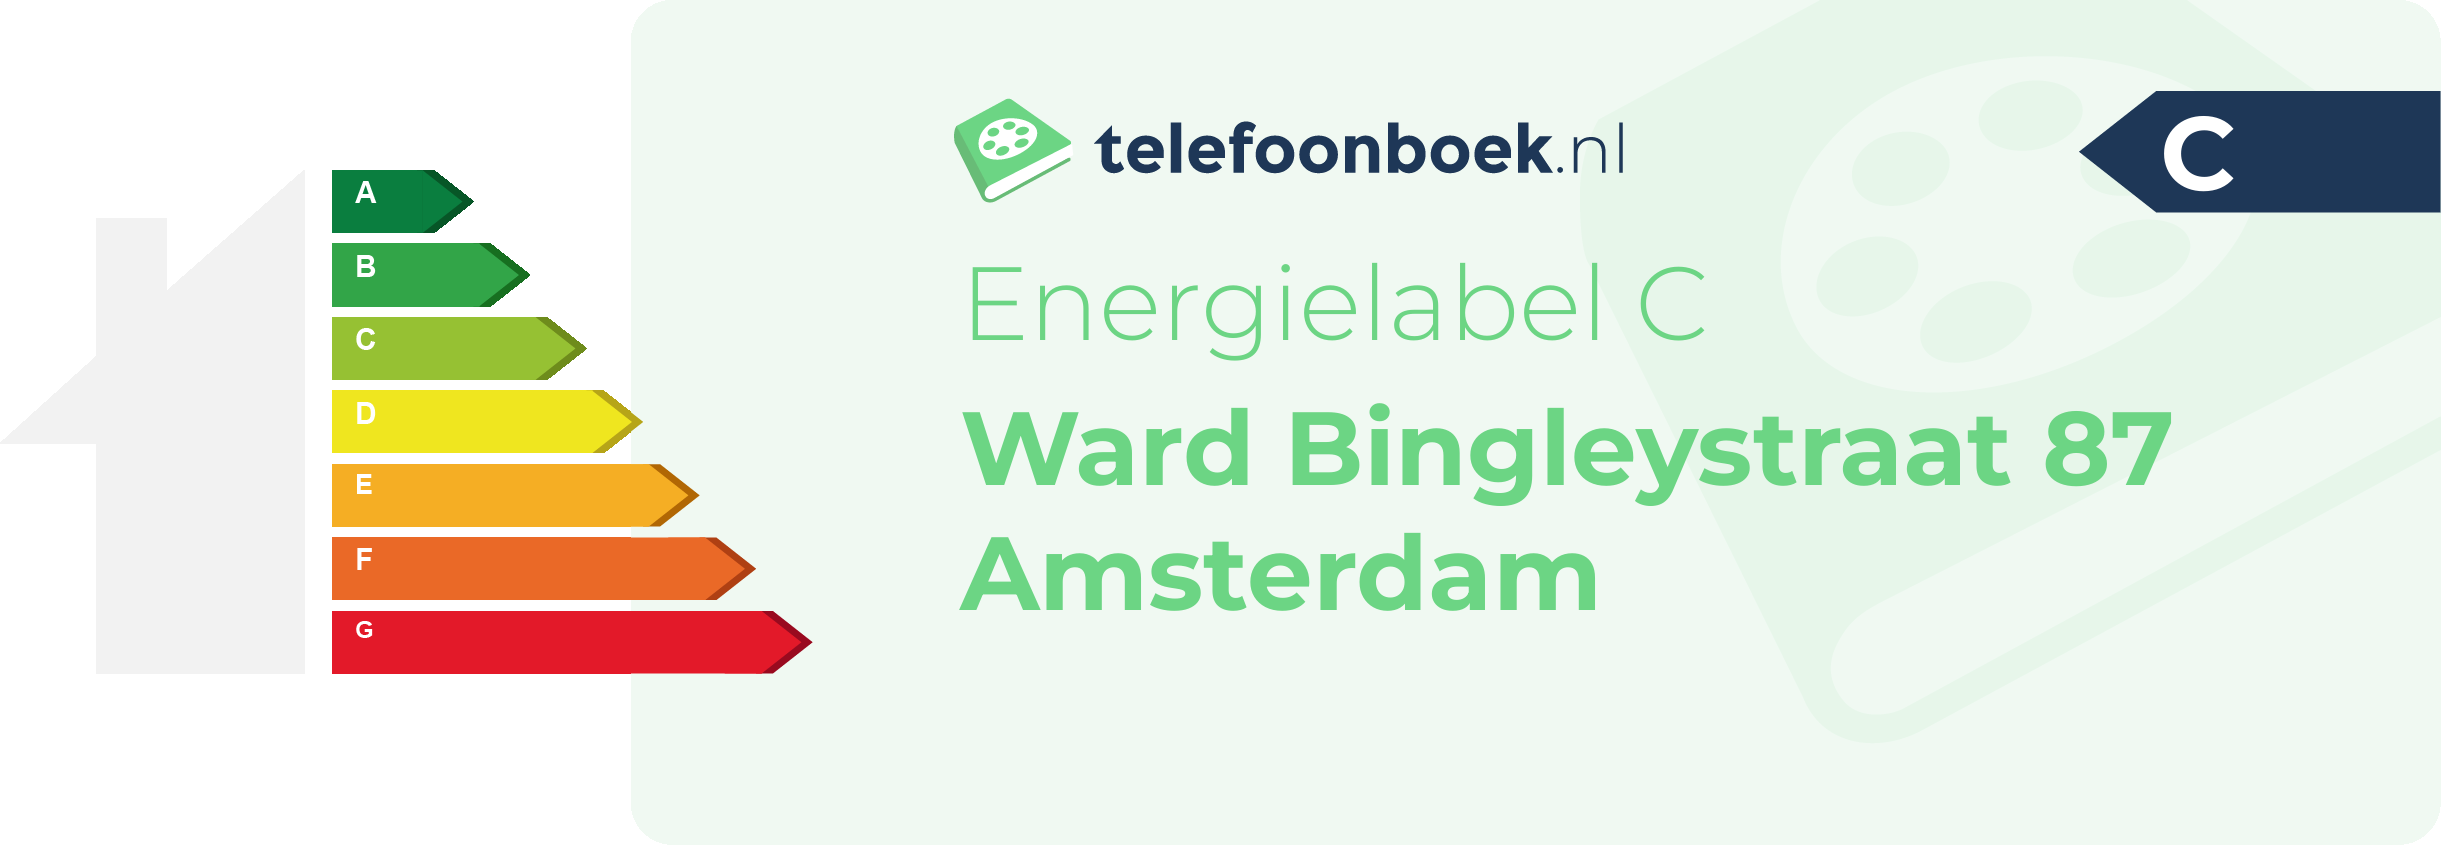 Energielabel Ward Bingleystraat 87 Amsterdam